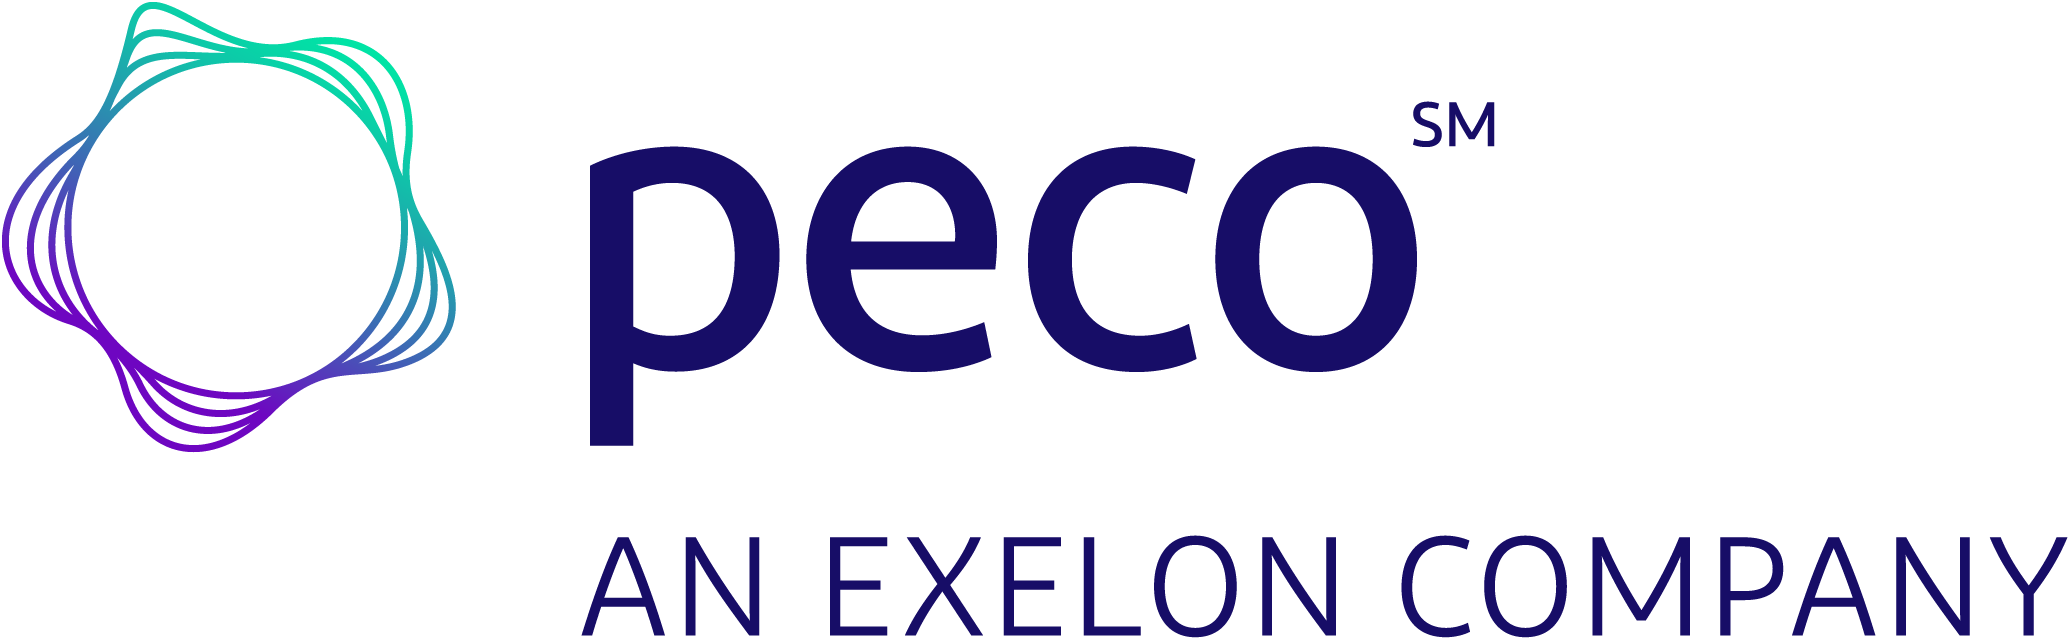 PECO An Exelon Company